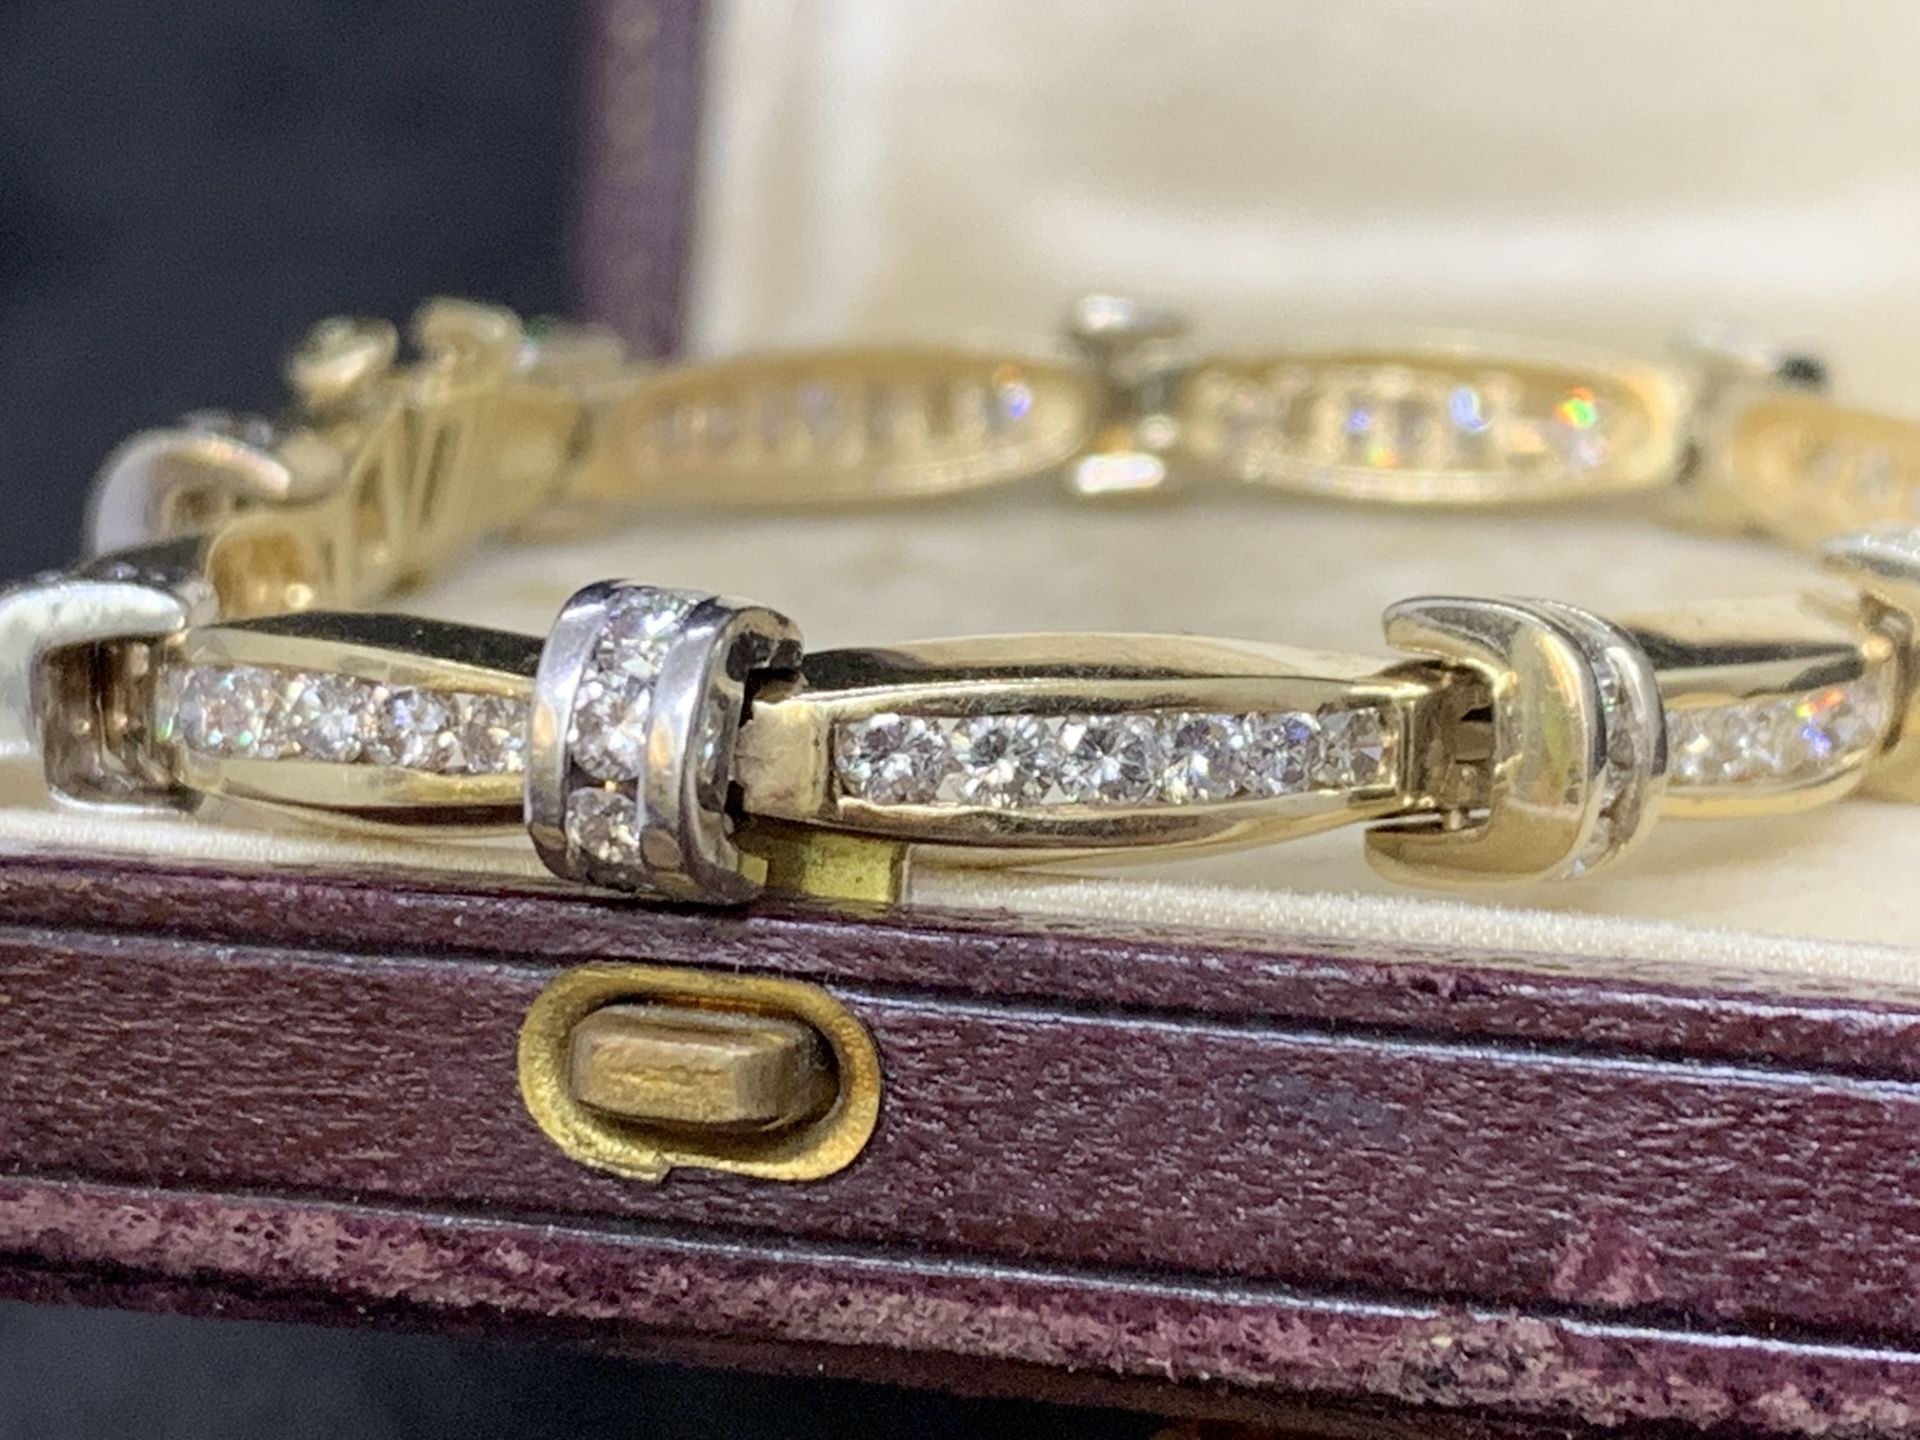 14 carat gold diamond bracelet set with approximately five carats of diamonds 25.8 g approximately